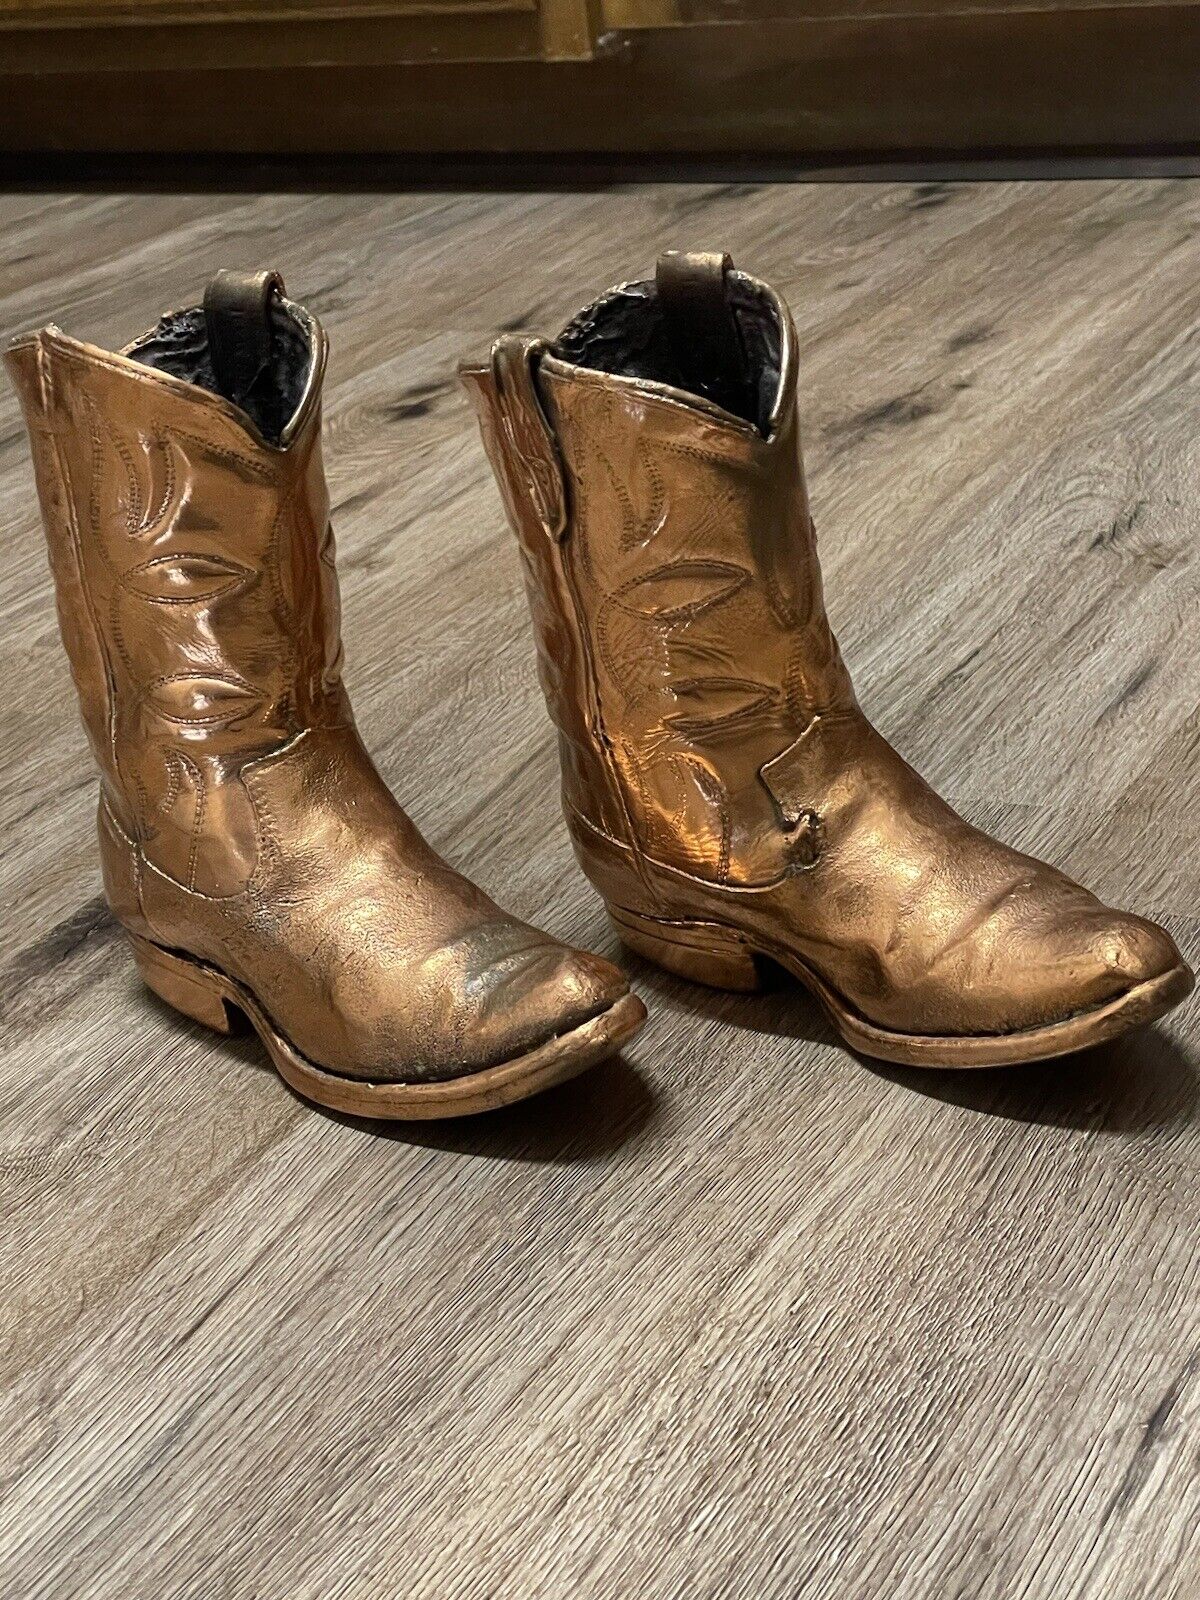 Vintage “Texas Brand” Cowboy Boots Bronze Preserved Pair Size 8 Bronzing Decor